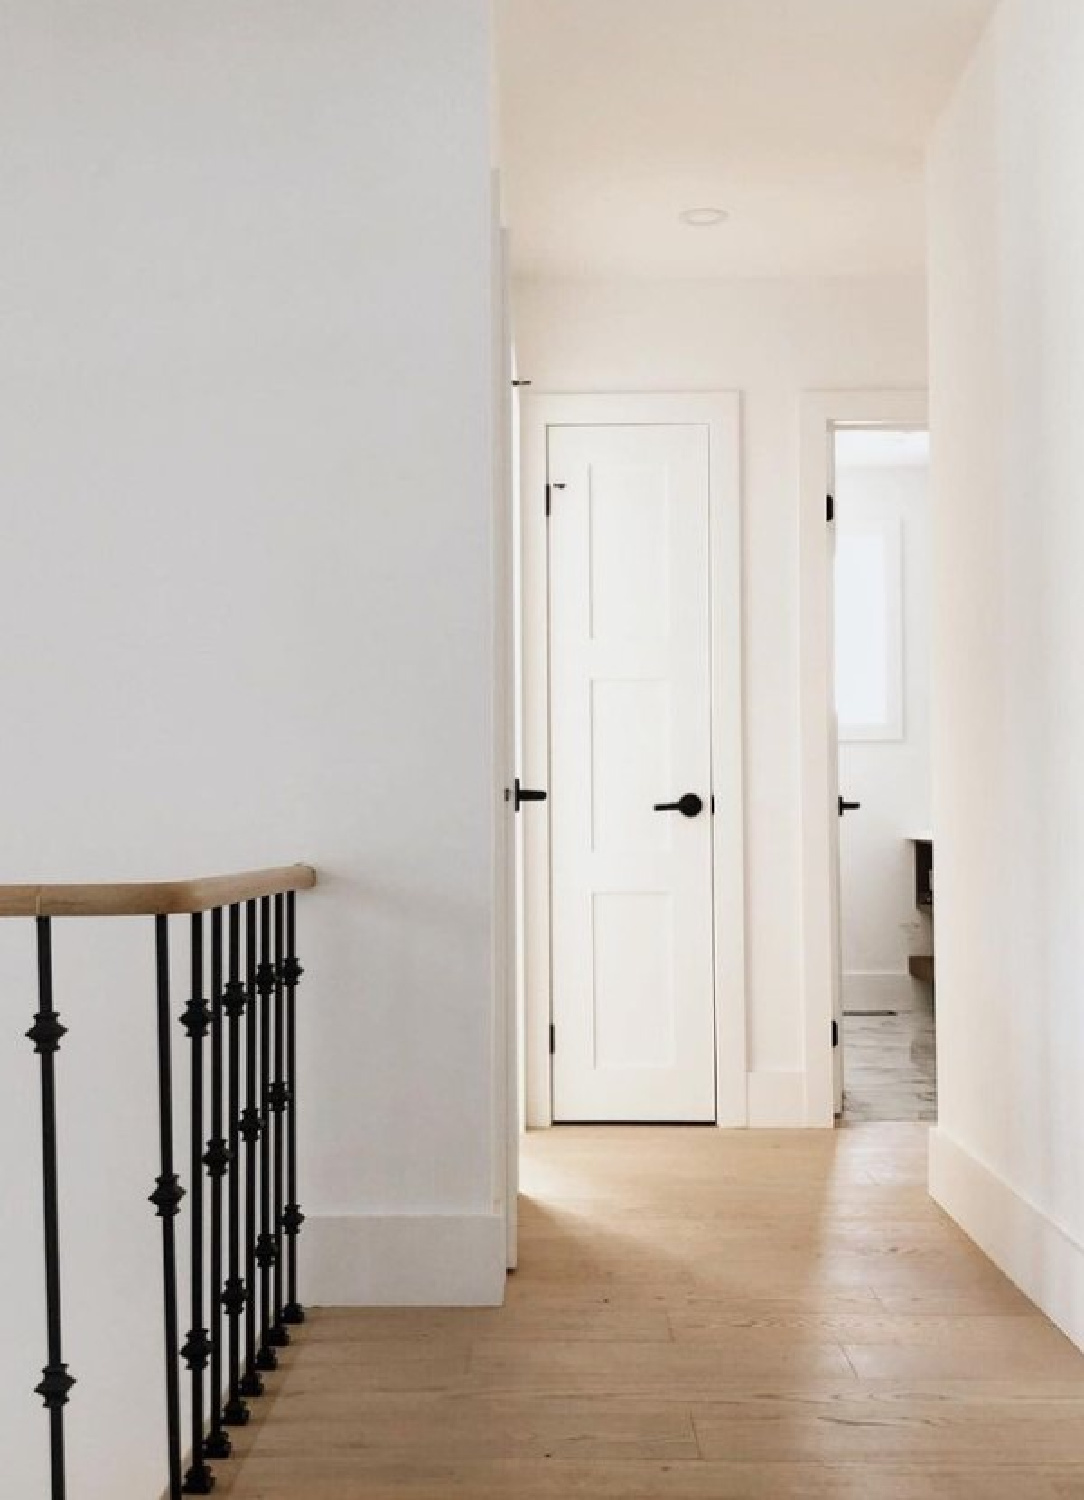 Chantilly Lace (Benjamin Moore) white hallway - @lindsay_jacobs_interiors #chantillylacepaintcolor #benjaminmoorechantillylace